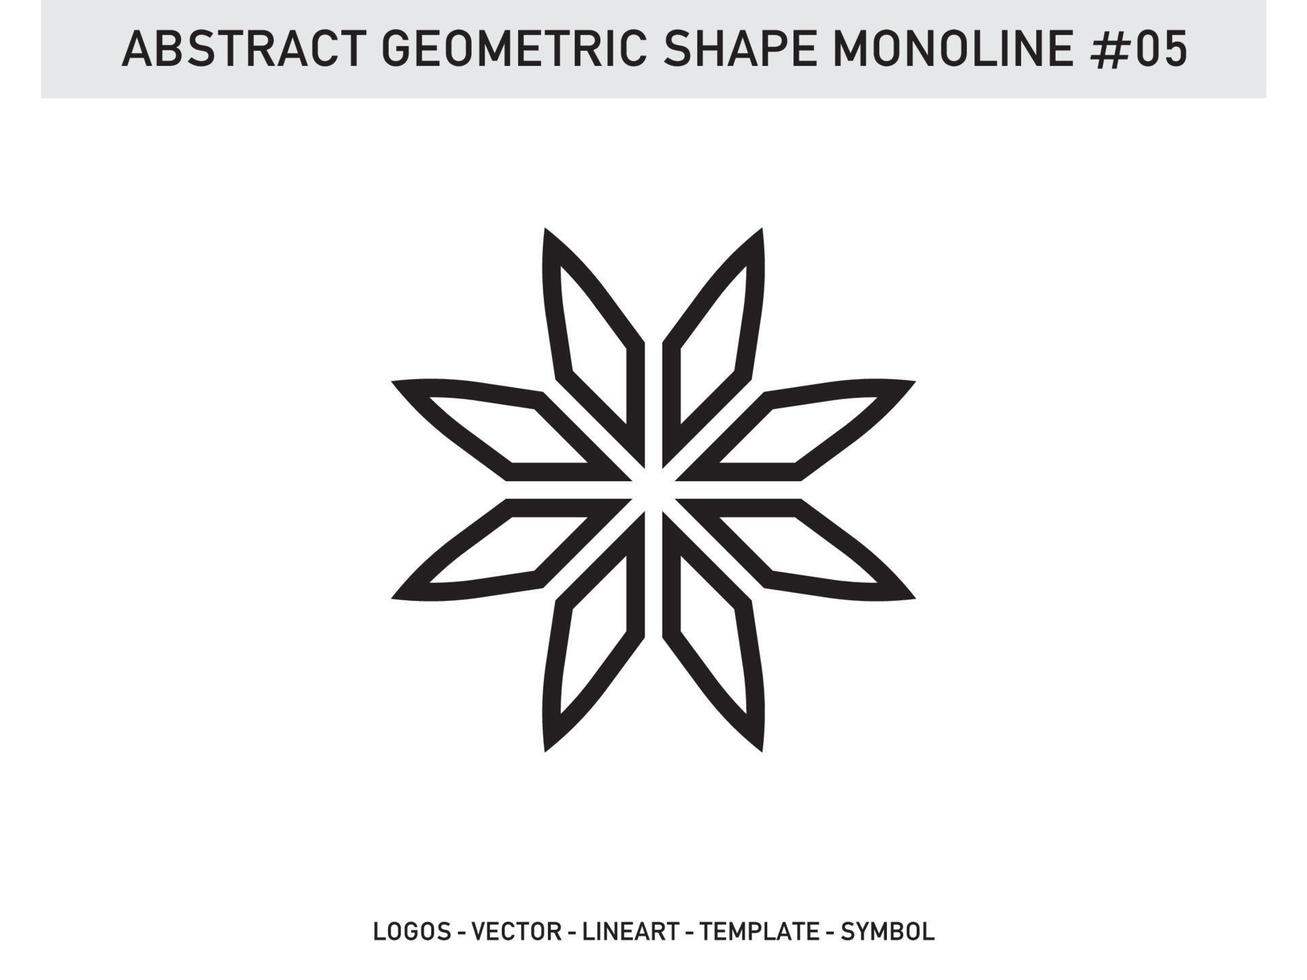 Monoline Geometric Abstract Shape Tile Design Decorative Free Pro vector